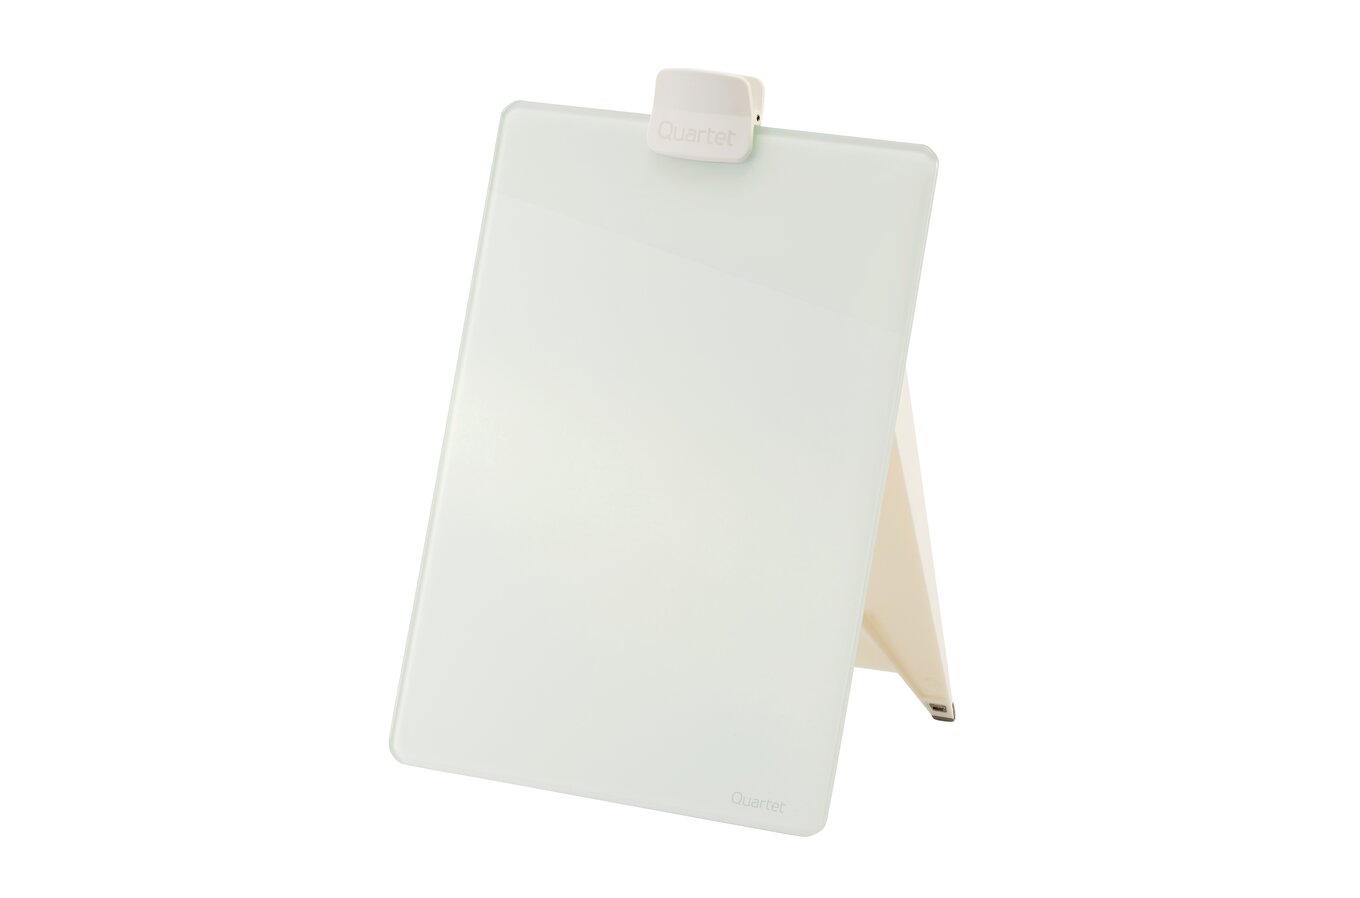 Quartet 9 x 11 White Glass Dry Erase Desktop Easel